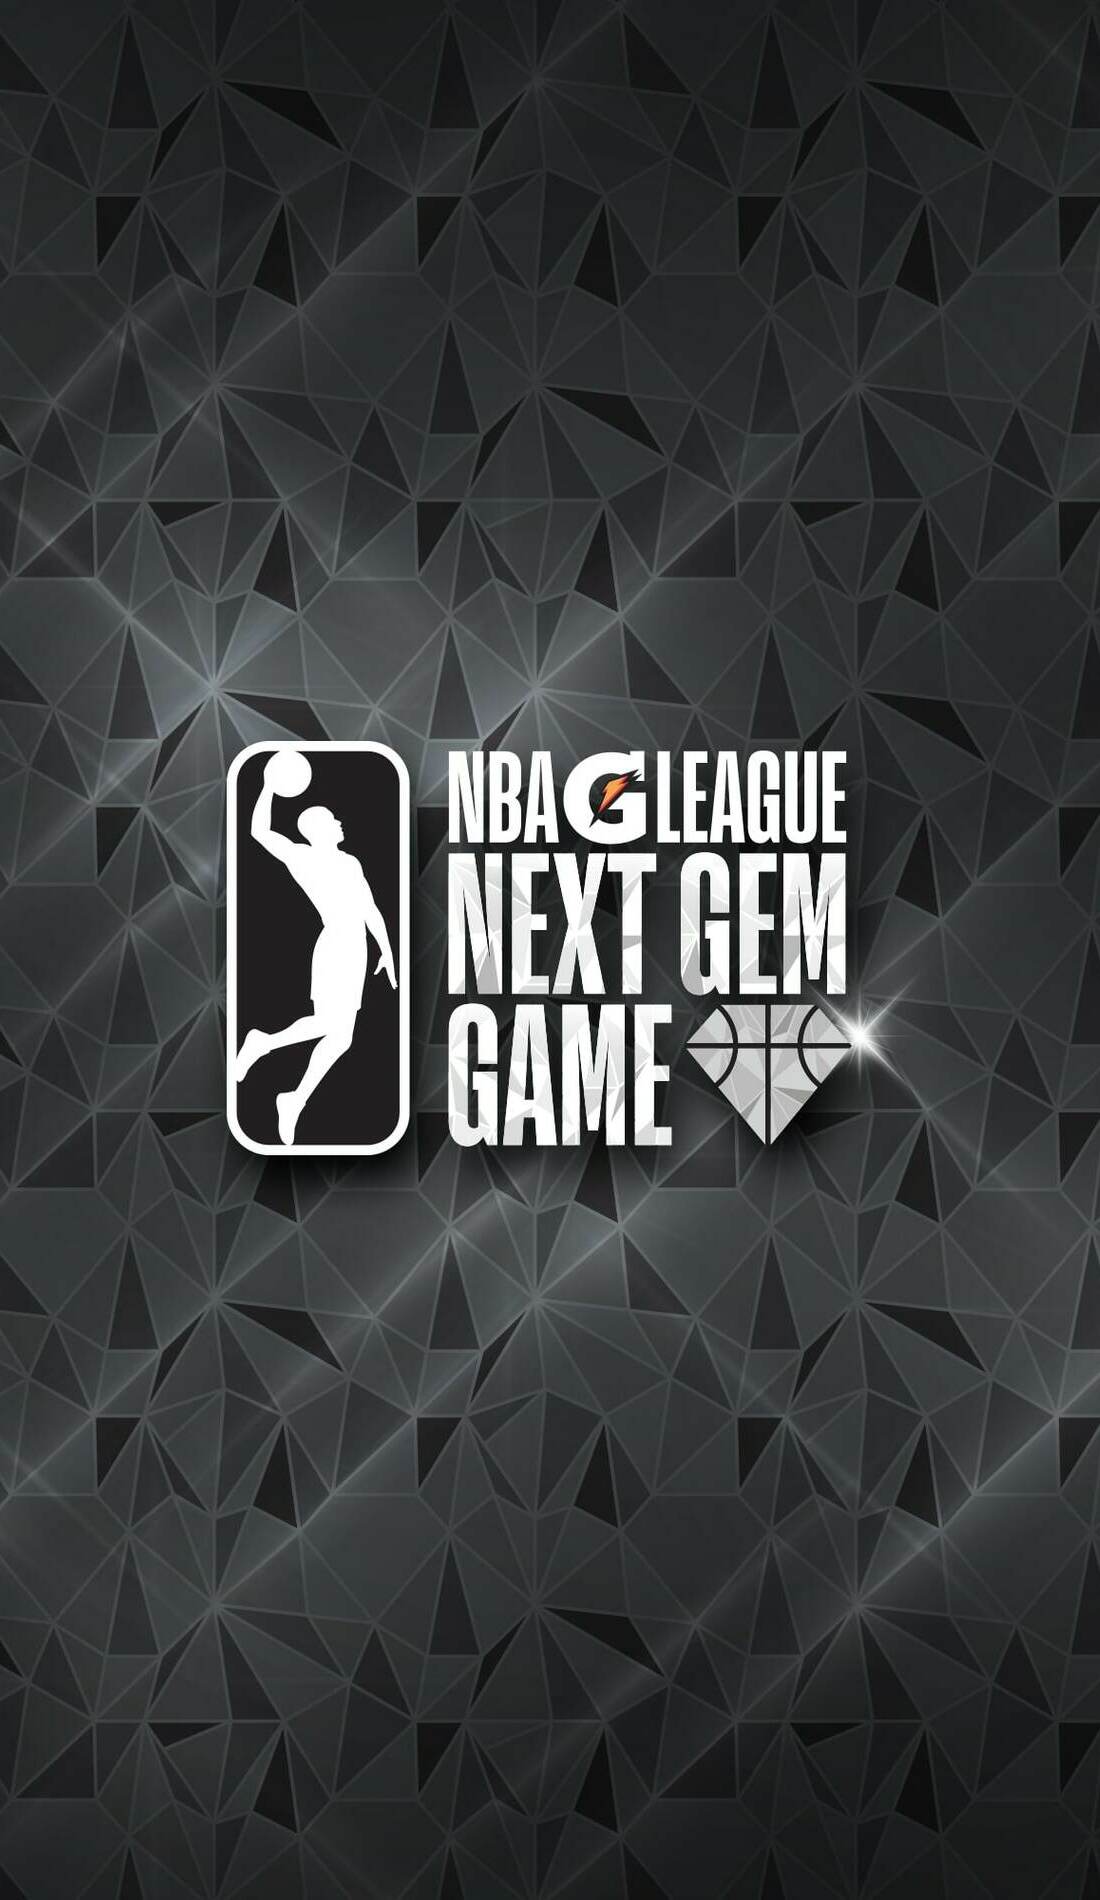 A NBA All-Star 2022 live event